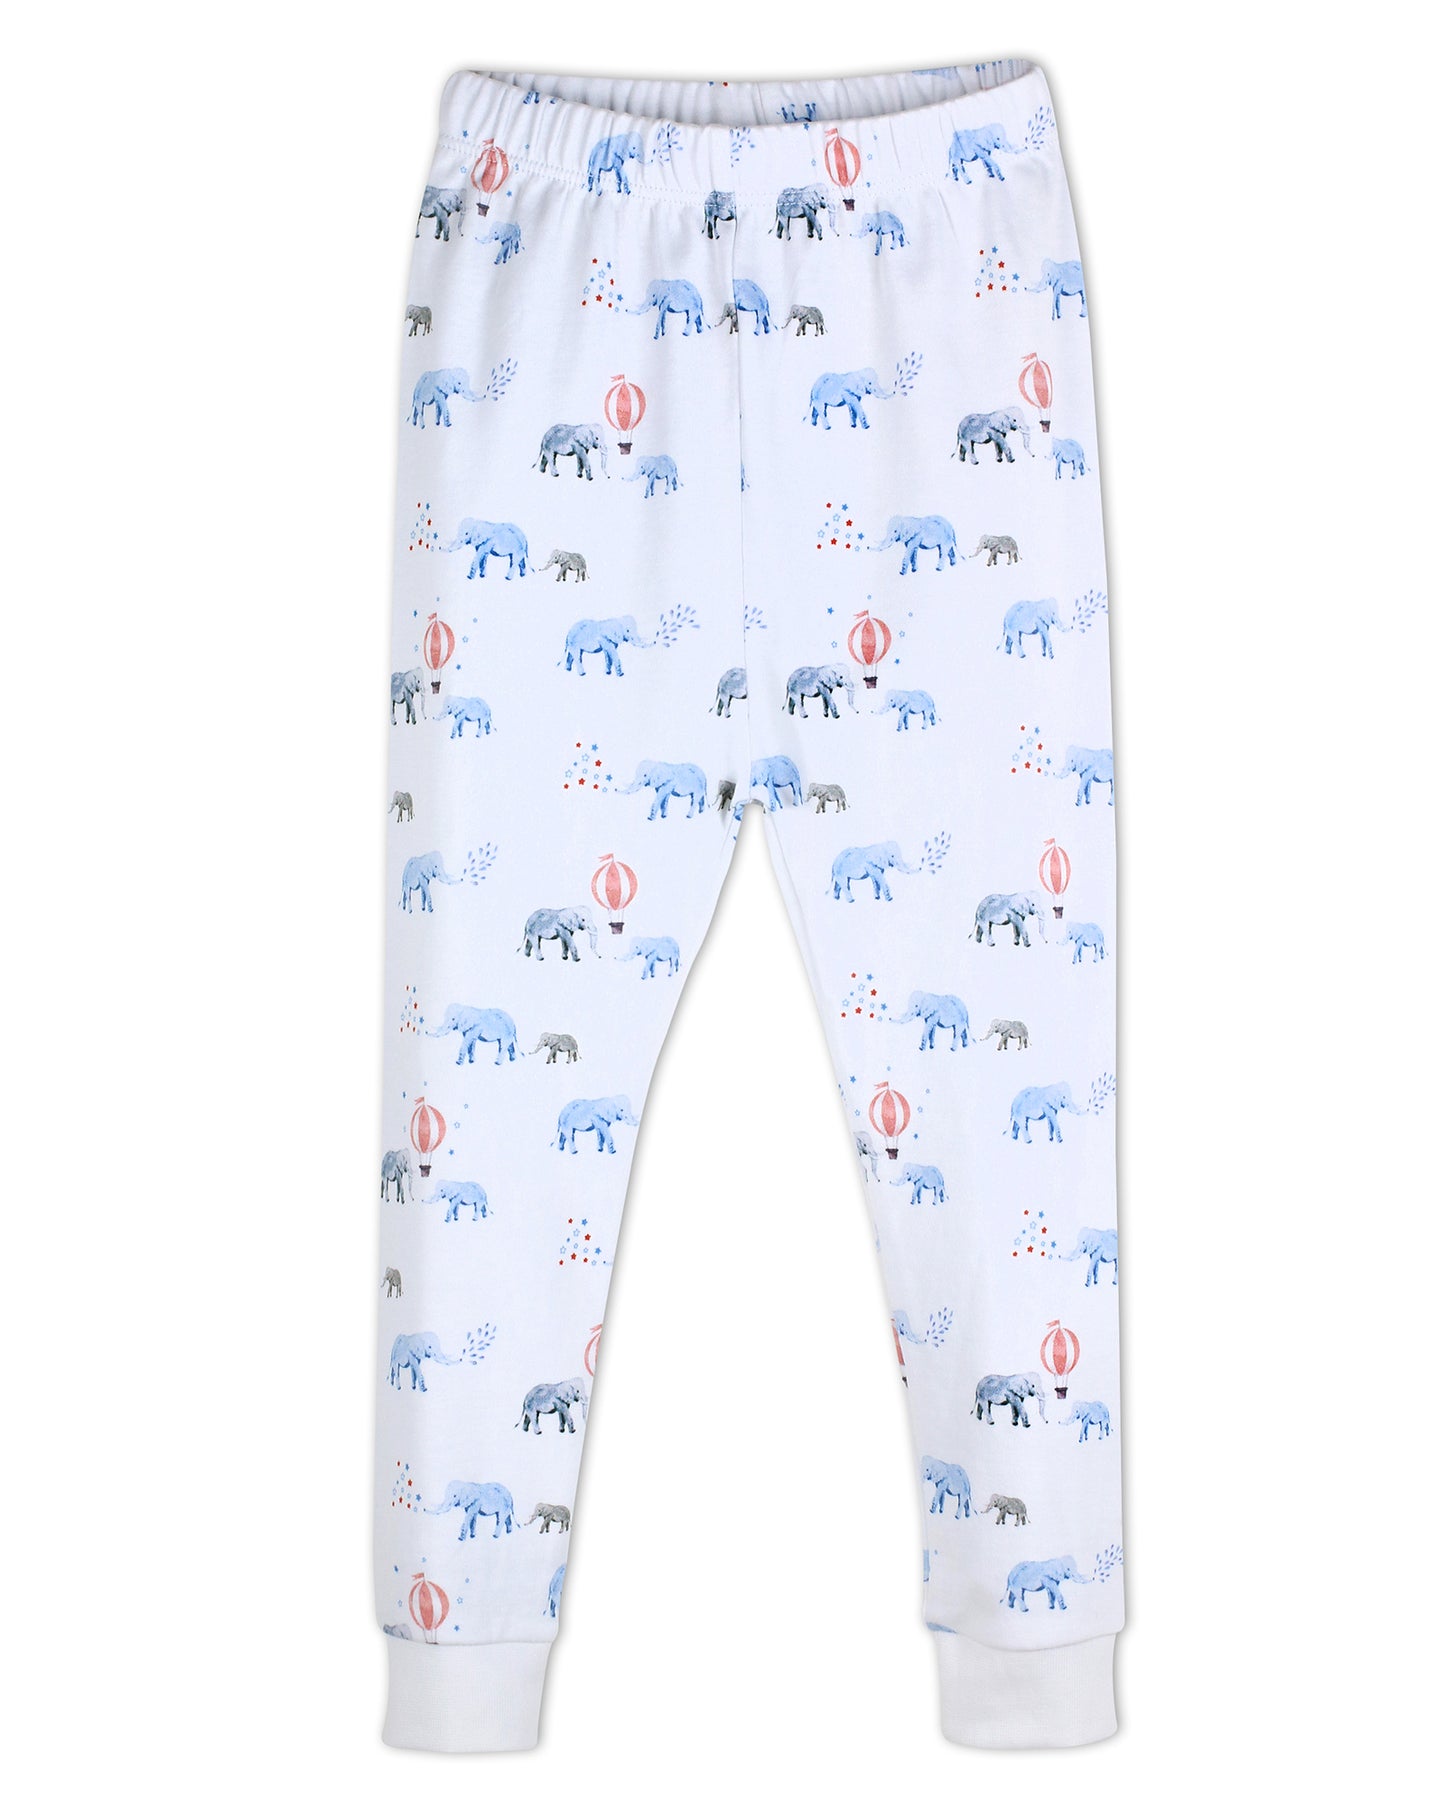 Elephants and Balloons Long Pajama Set